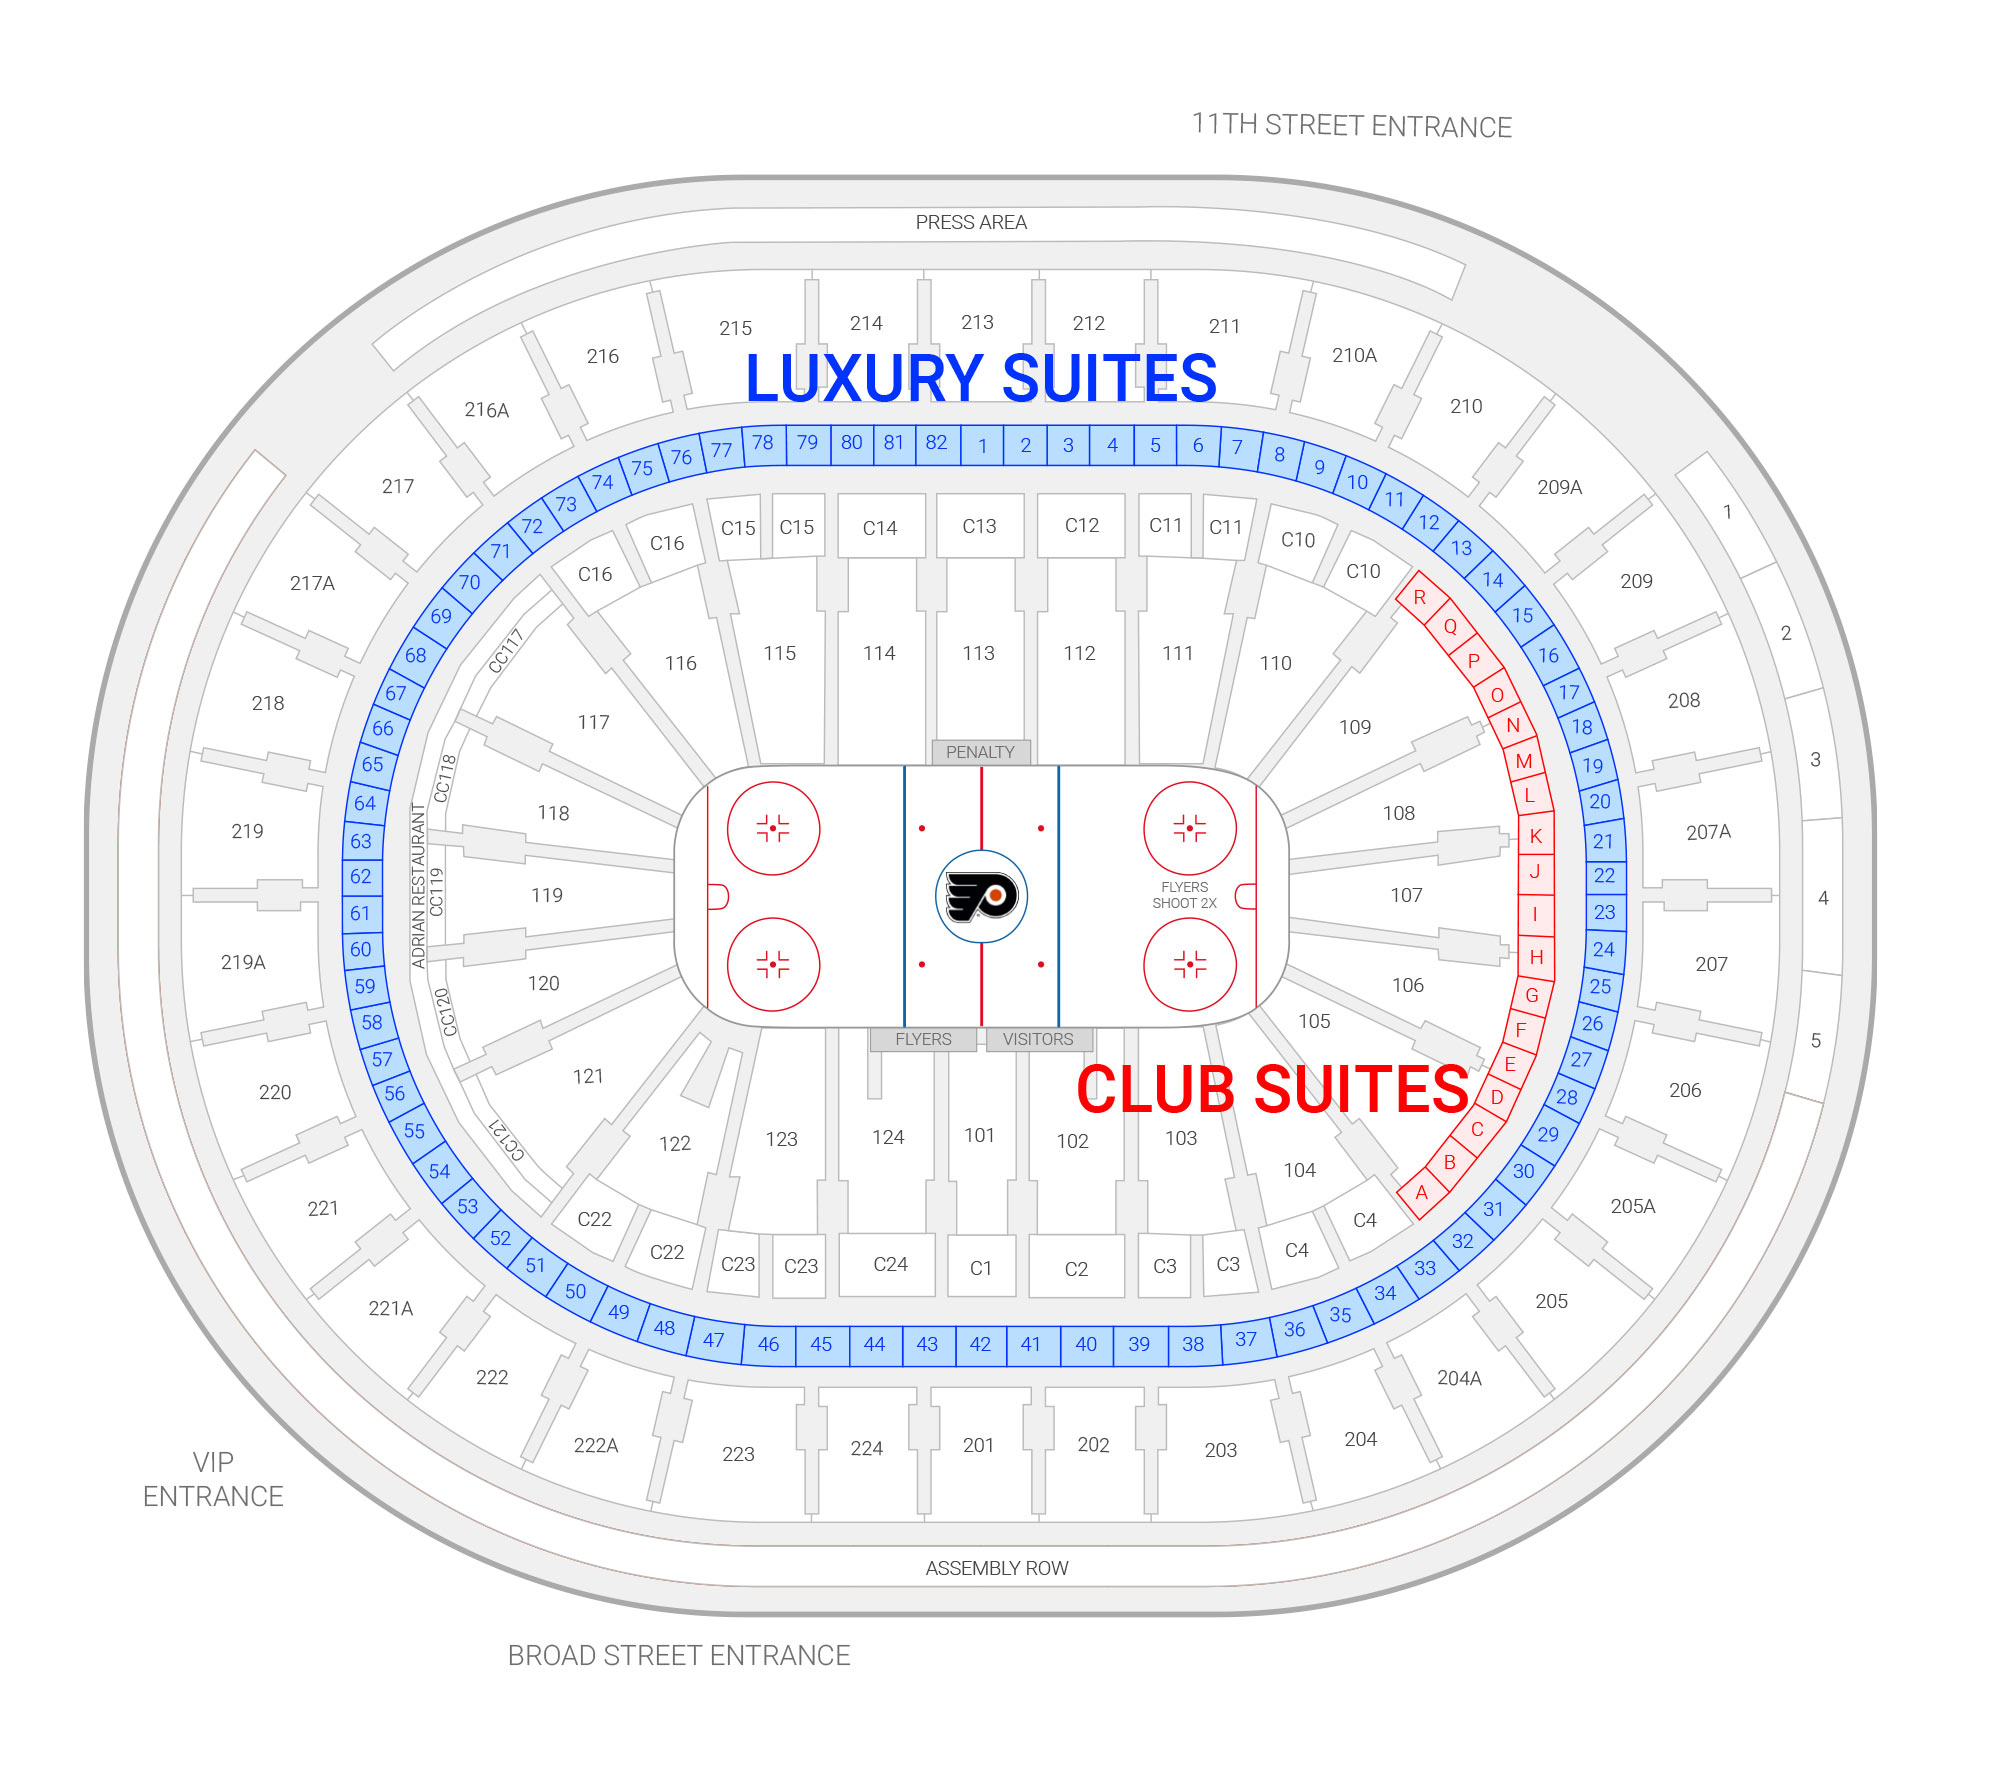 Flyers Stadium Series Seating Chart